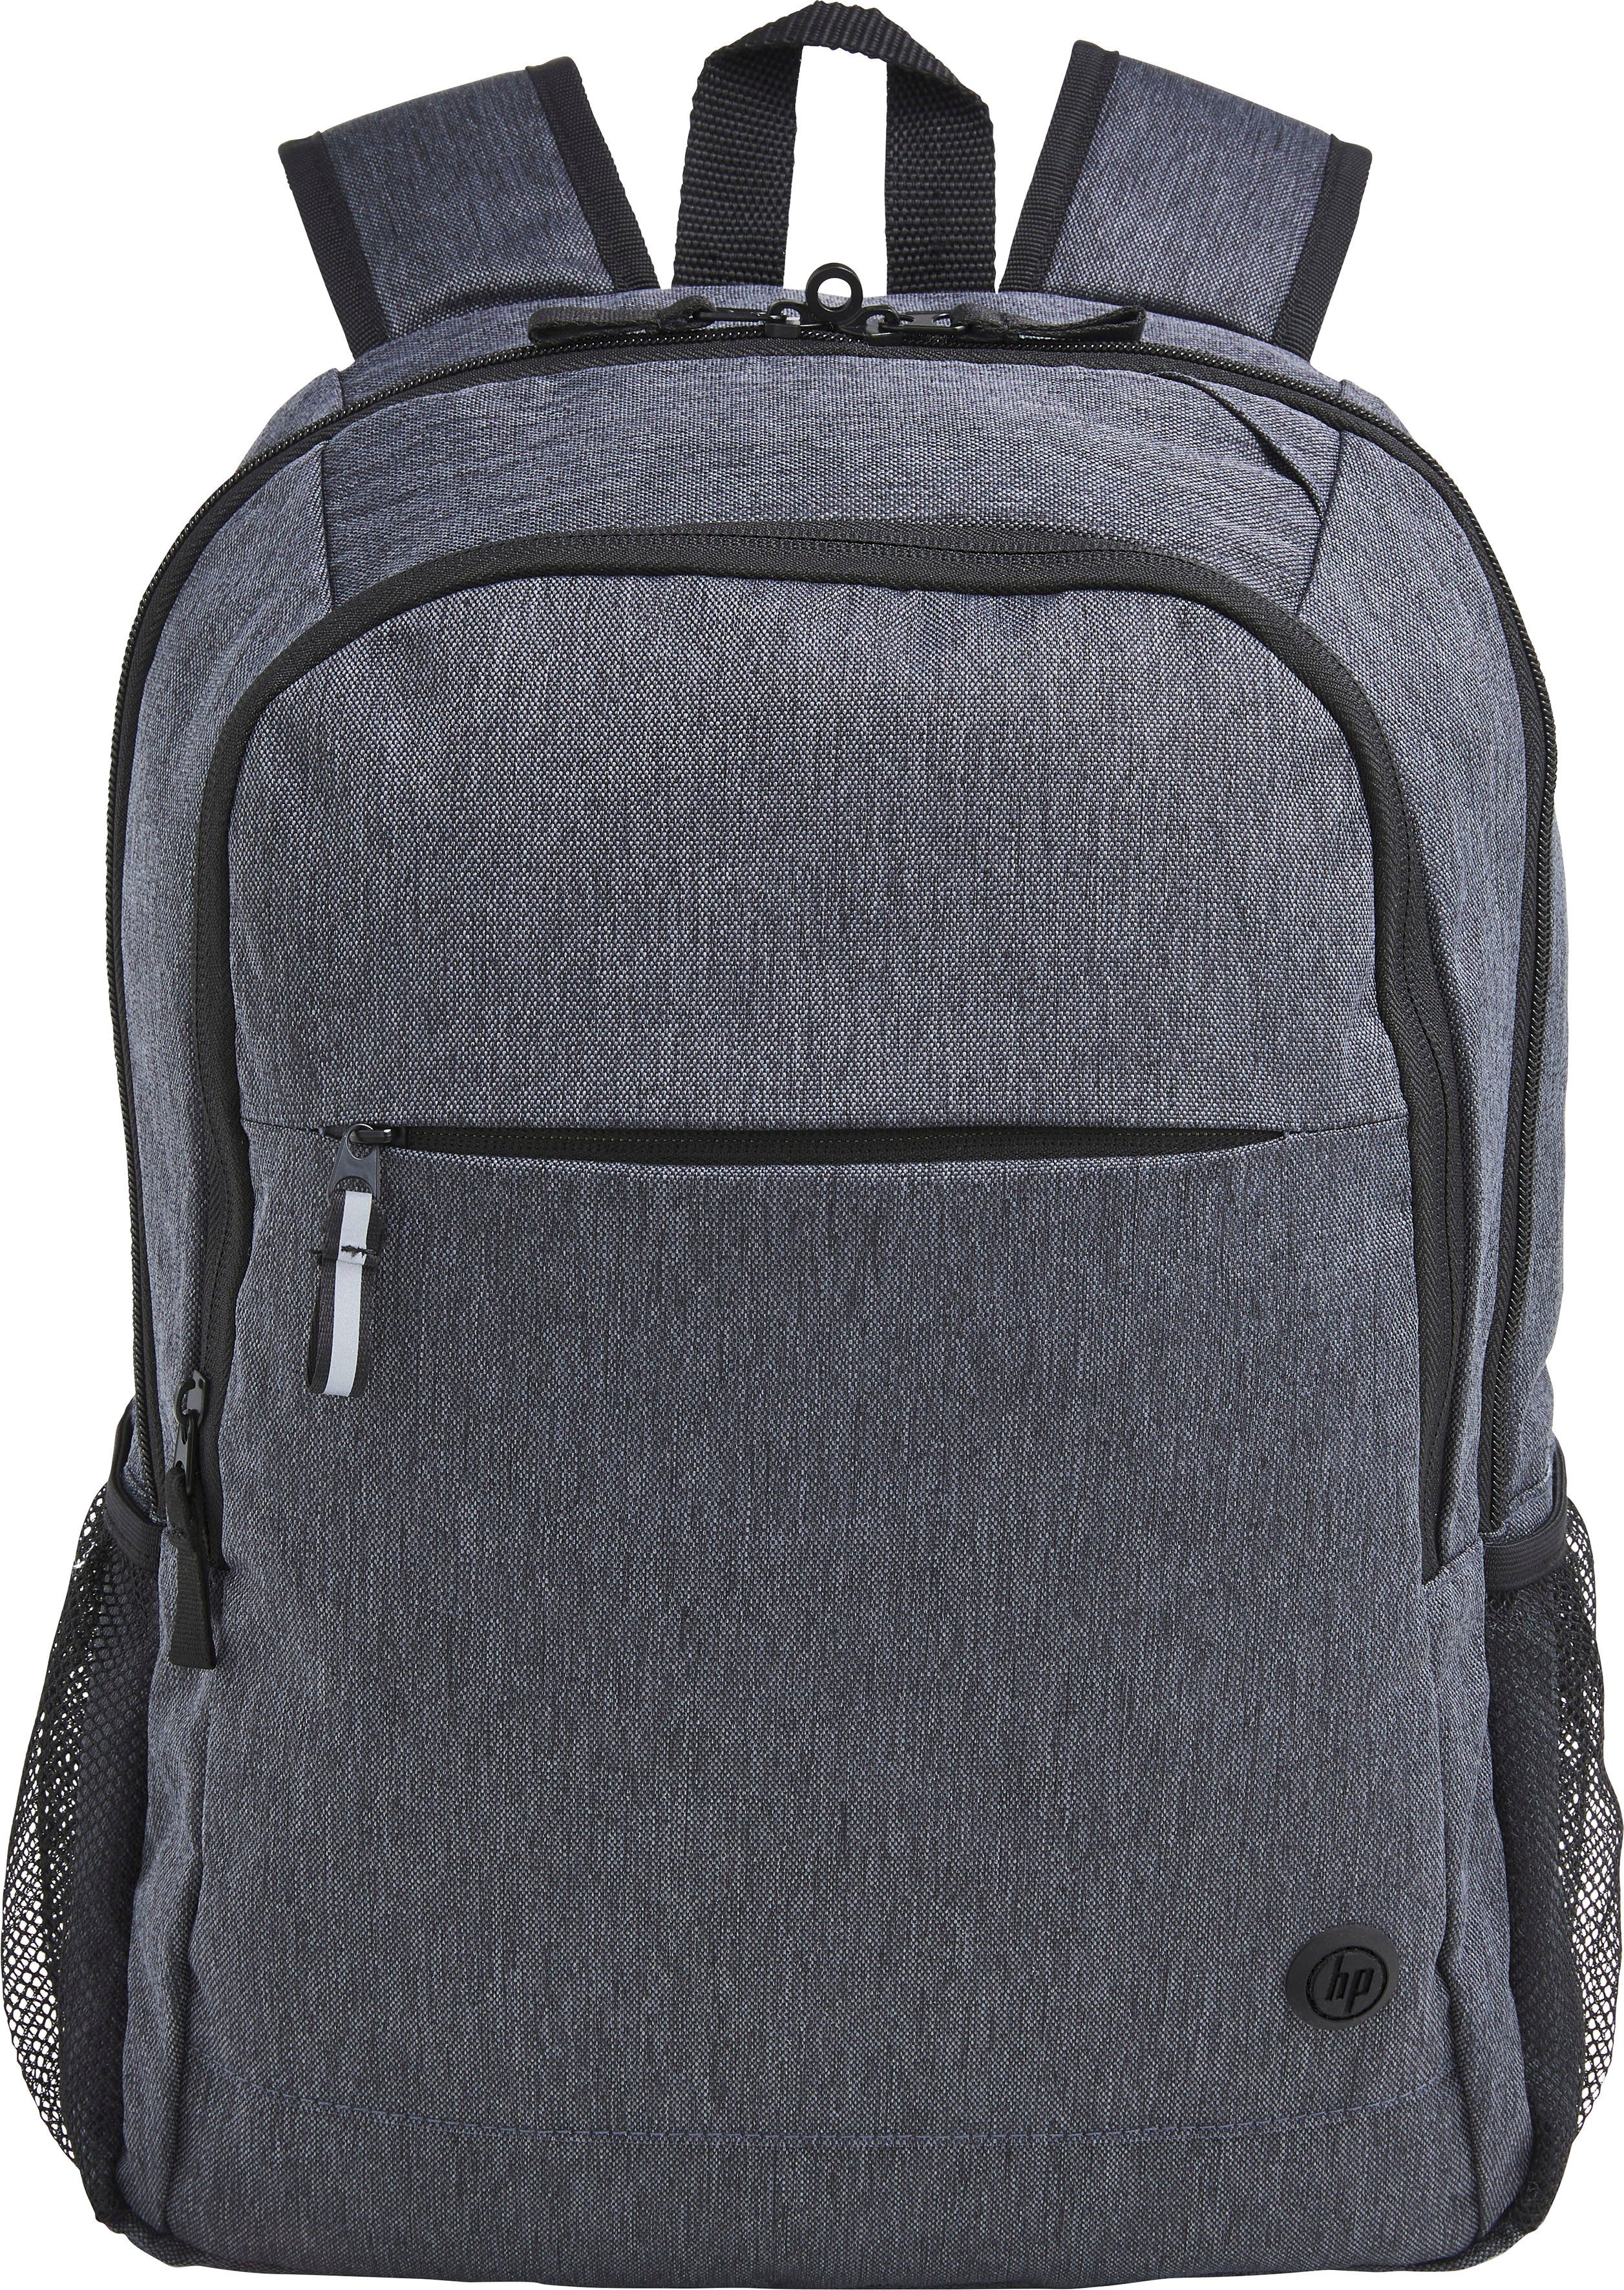 Pro HP 15,6" Prelude Backpack Notebookrucksack